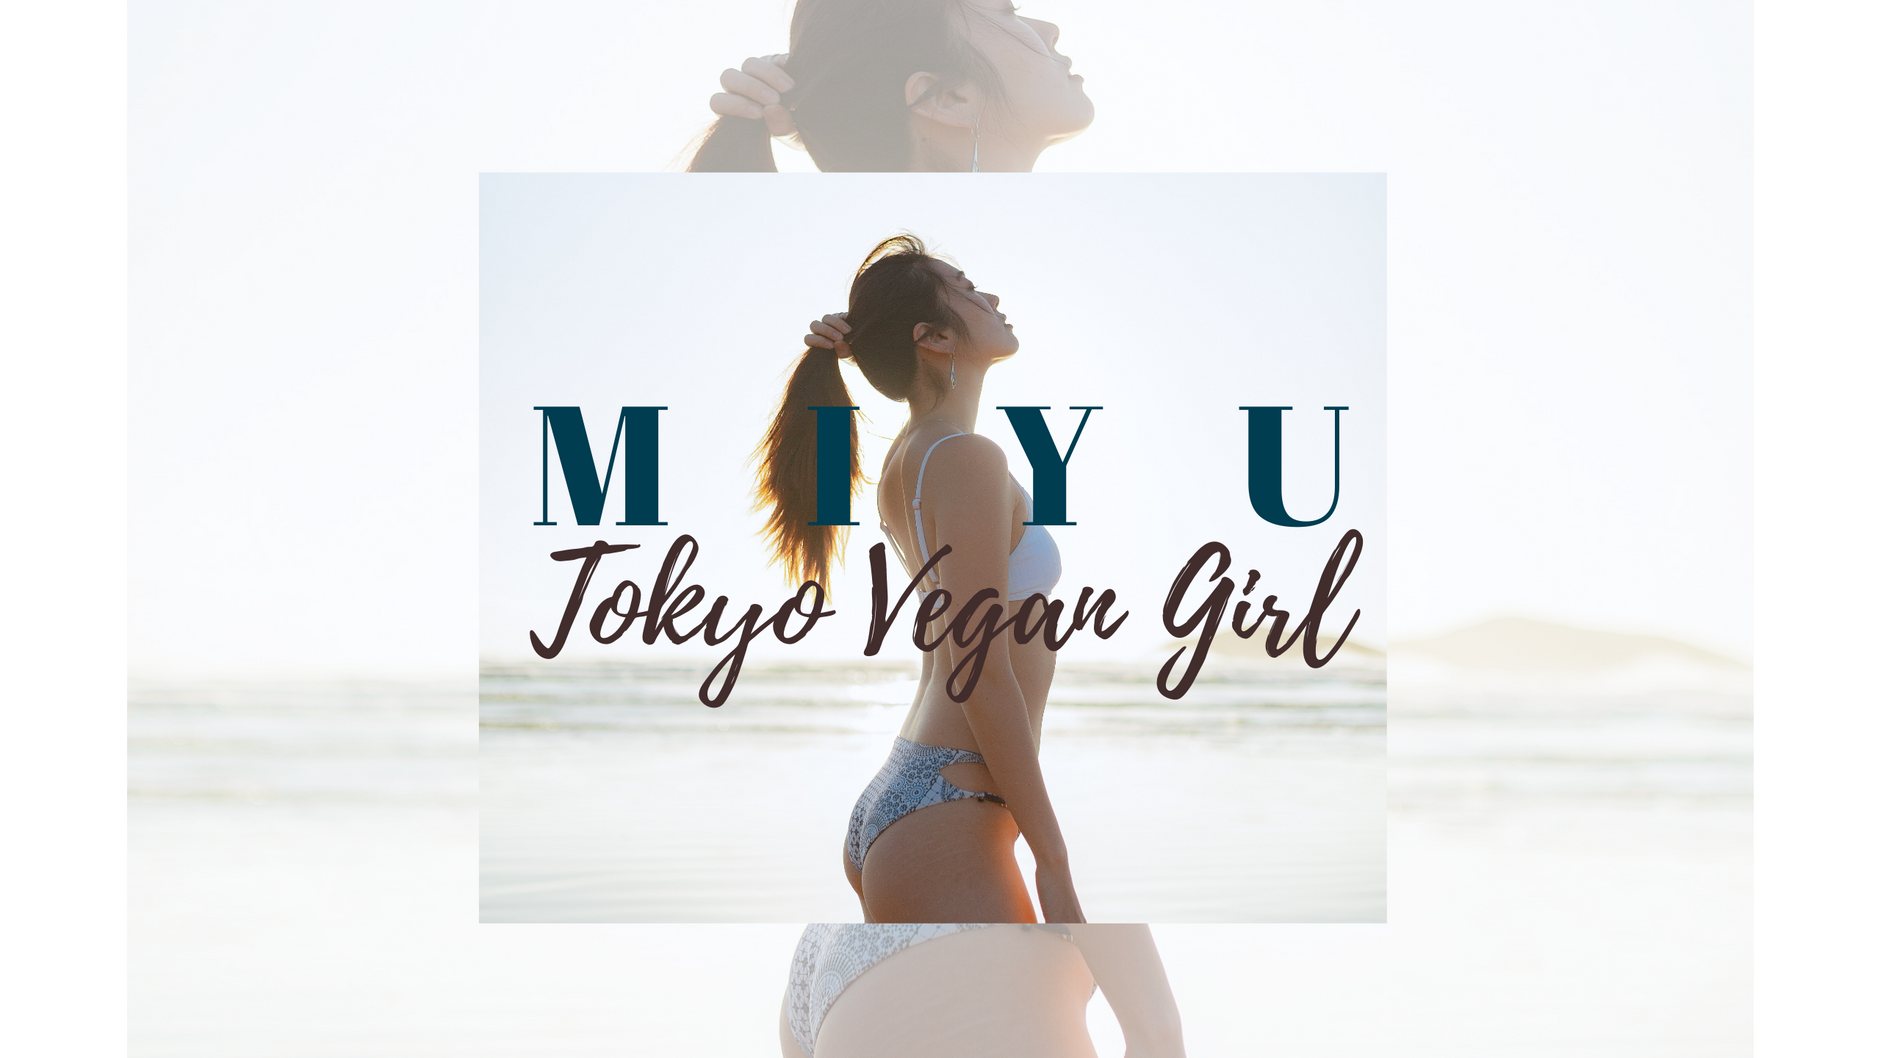 MIYU ＊ Tokyo Vegan Girl